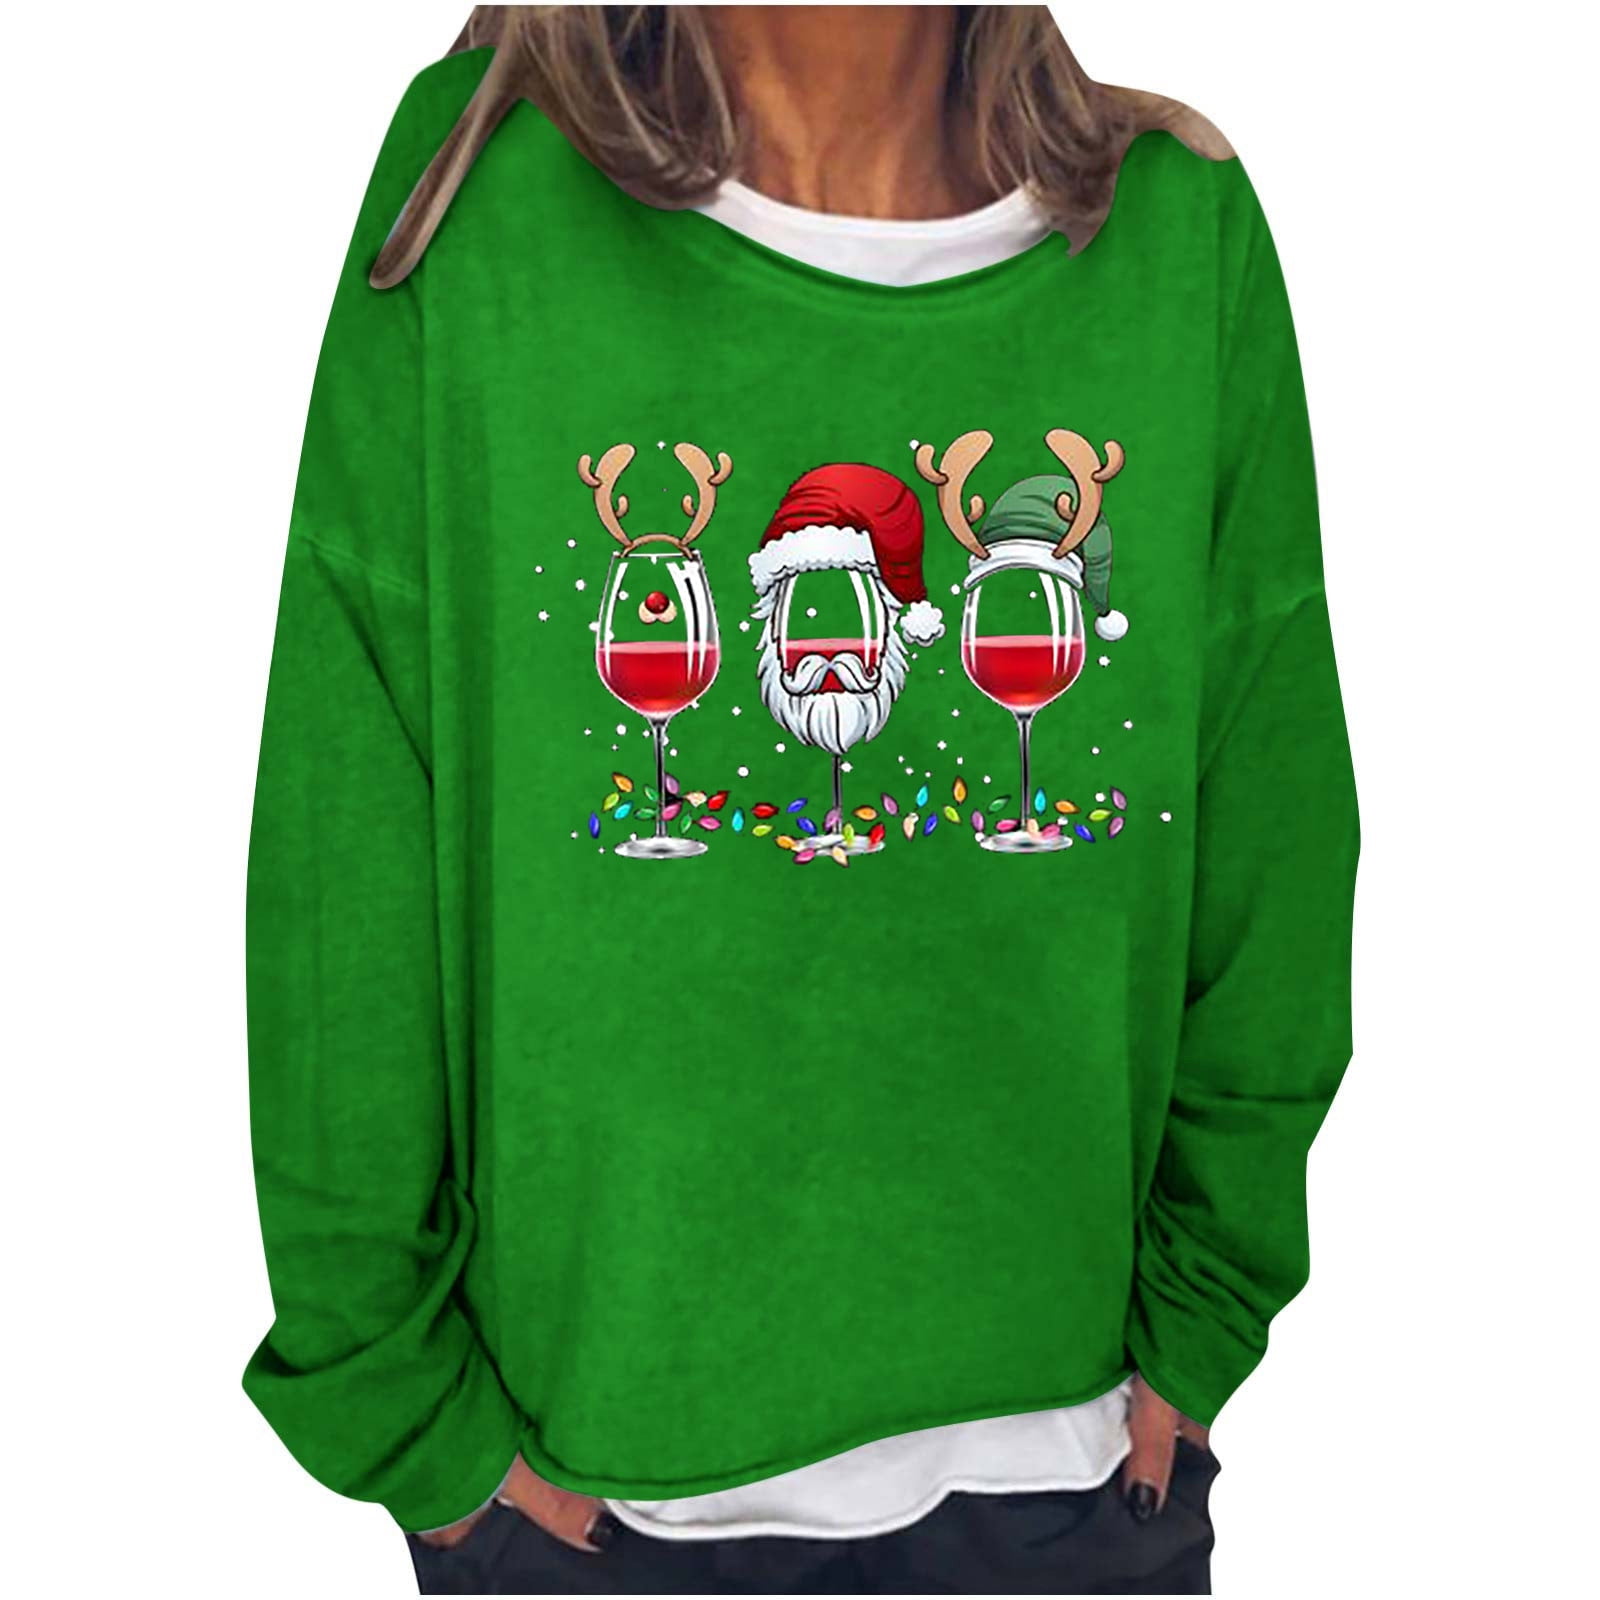 Lovskoo Christmas Sweatshirts for Women Large Tie Dyed Printed Round ...